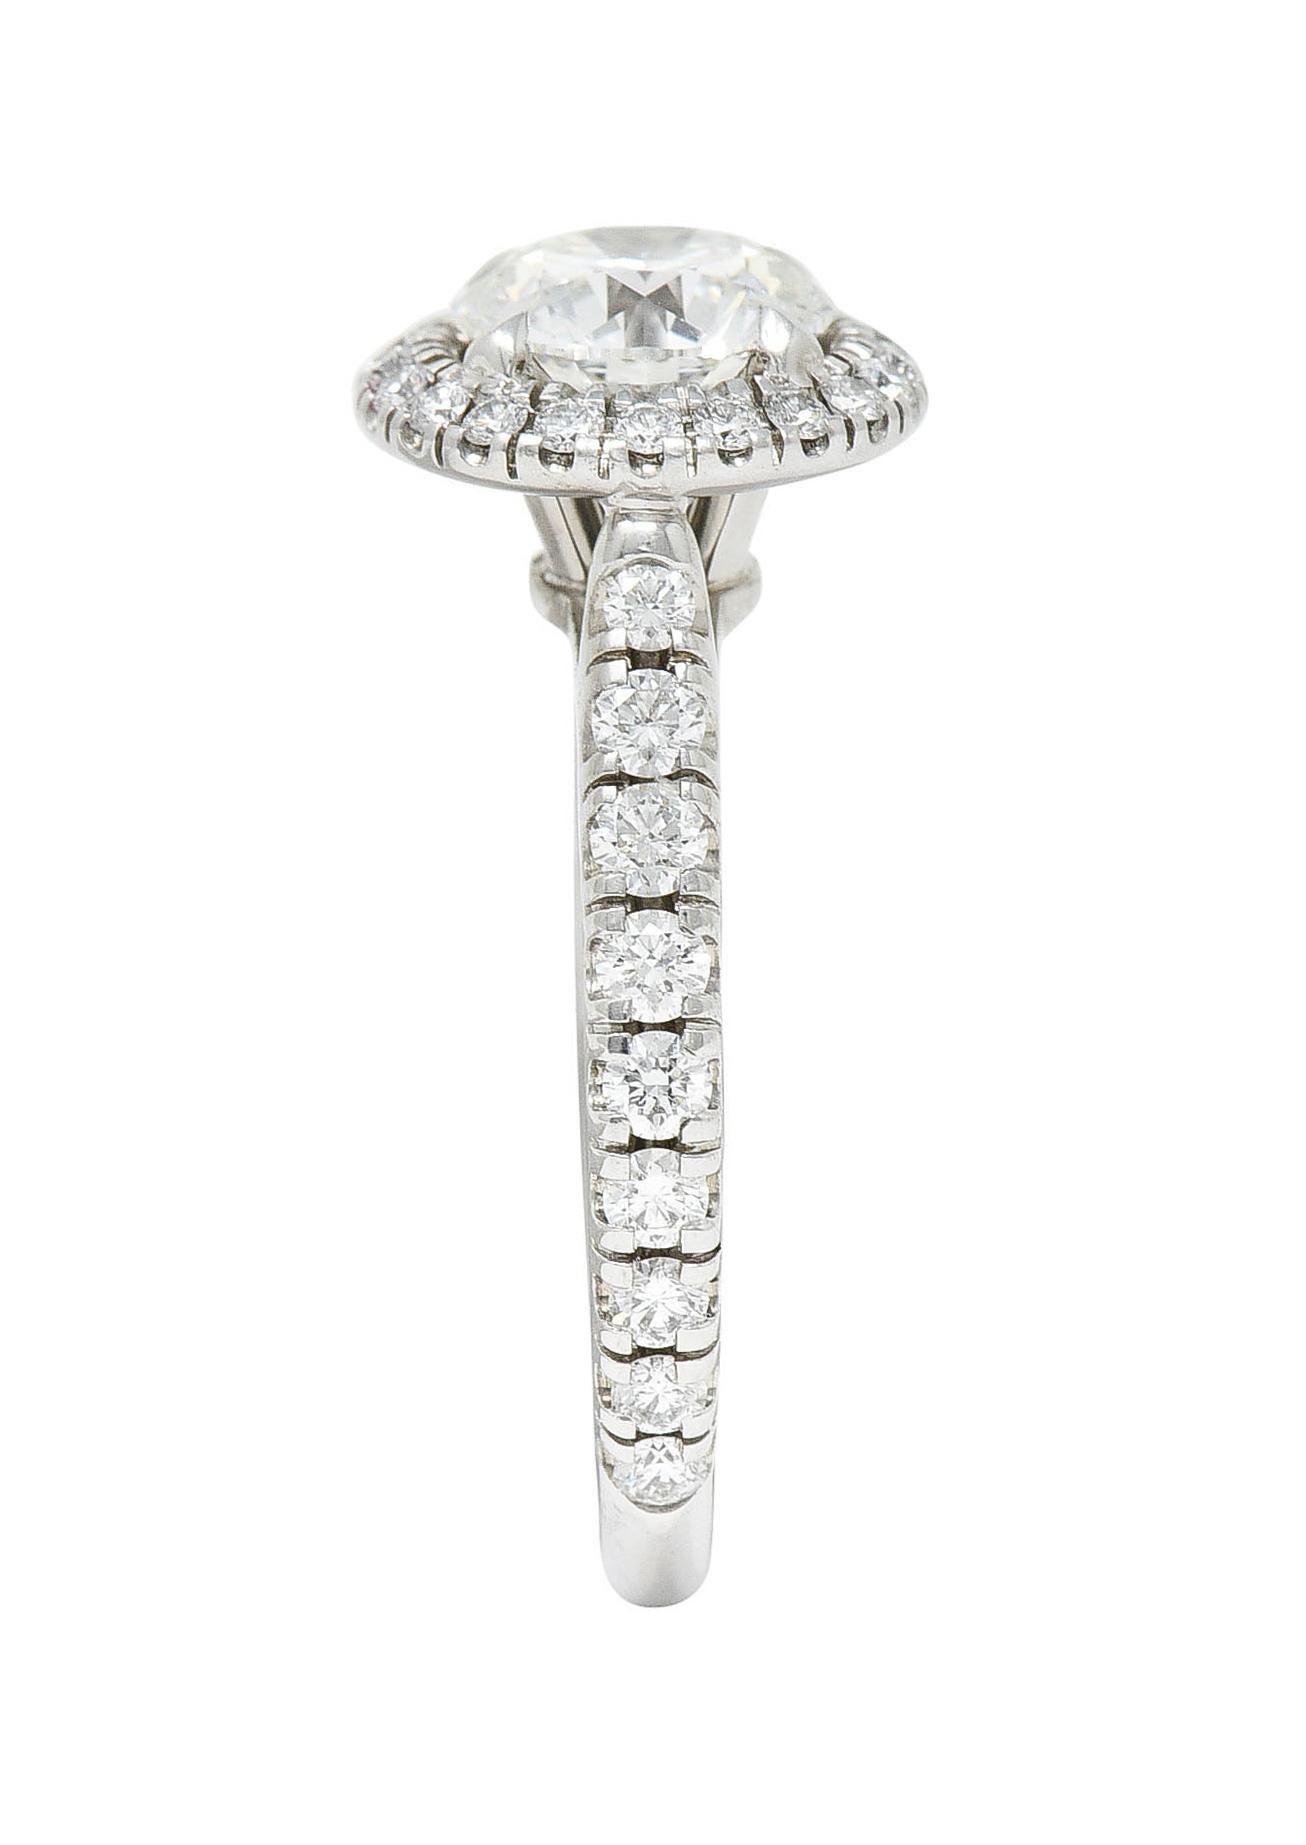 Cartier Destinee 1.55 Carats Diamond Platinum Halo Engagement Ring GIA 1